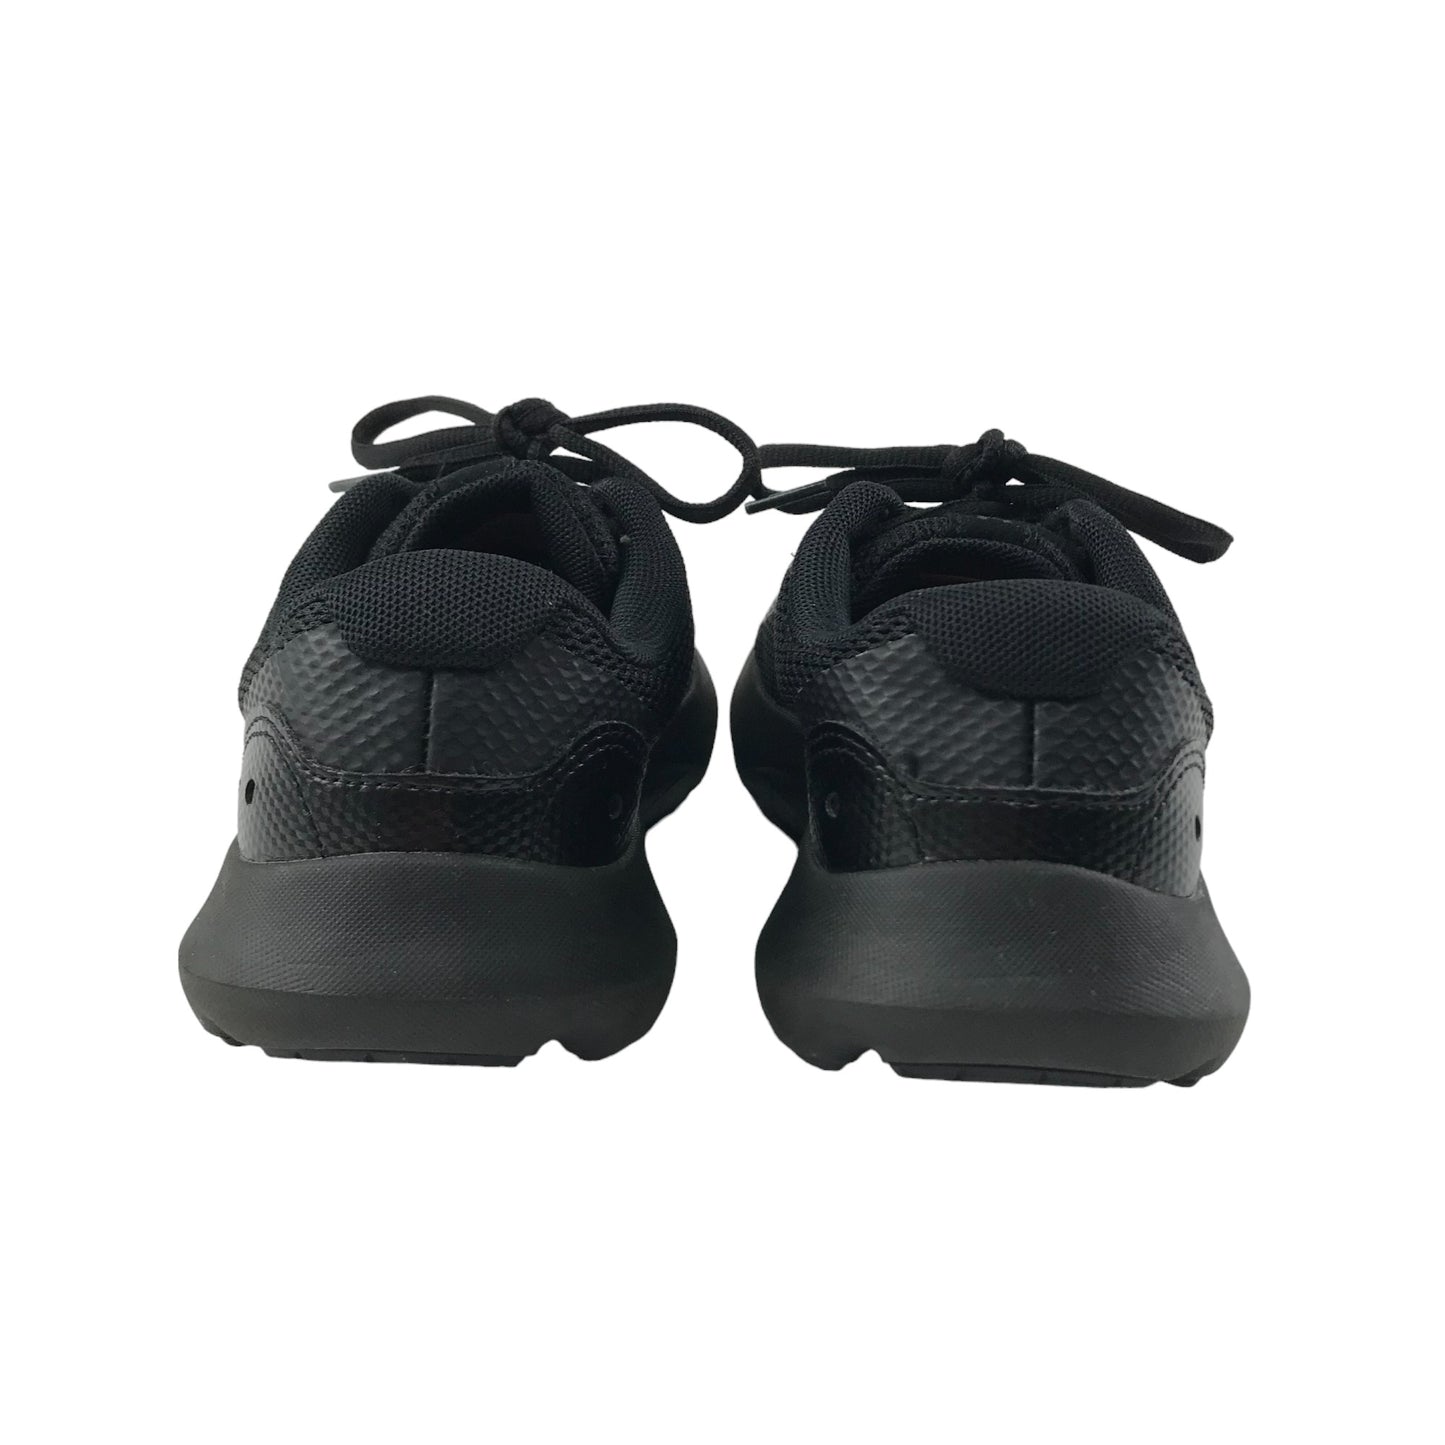 Under Armour Surge Trainers Shoe Size 5 Black with Laces